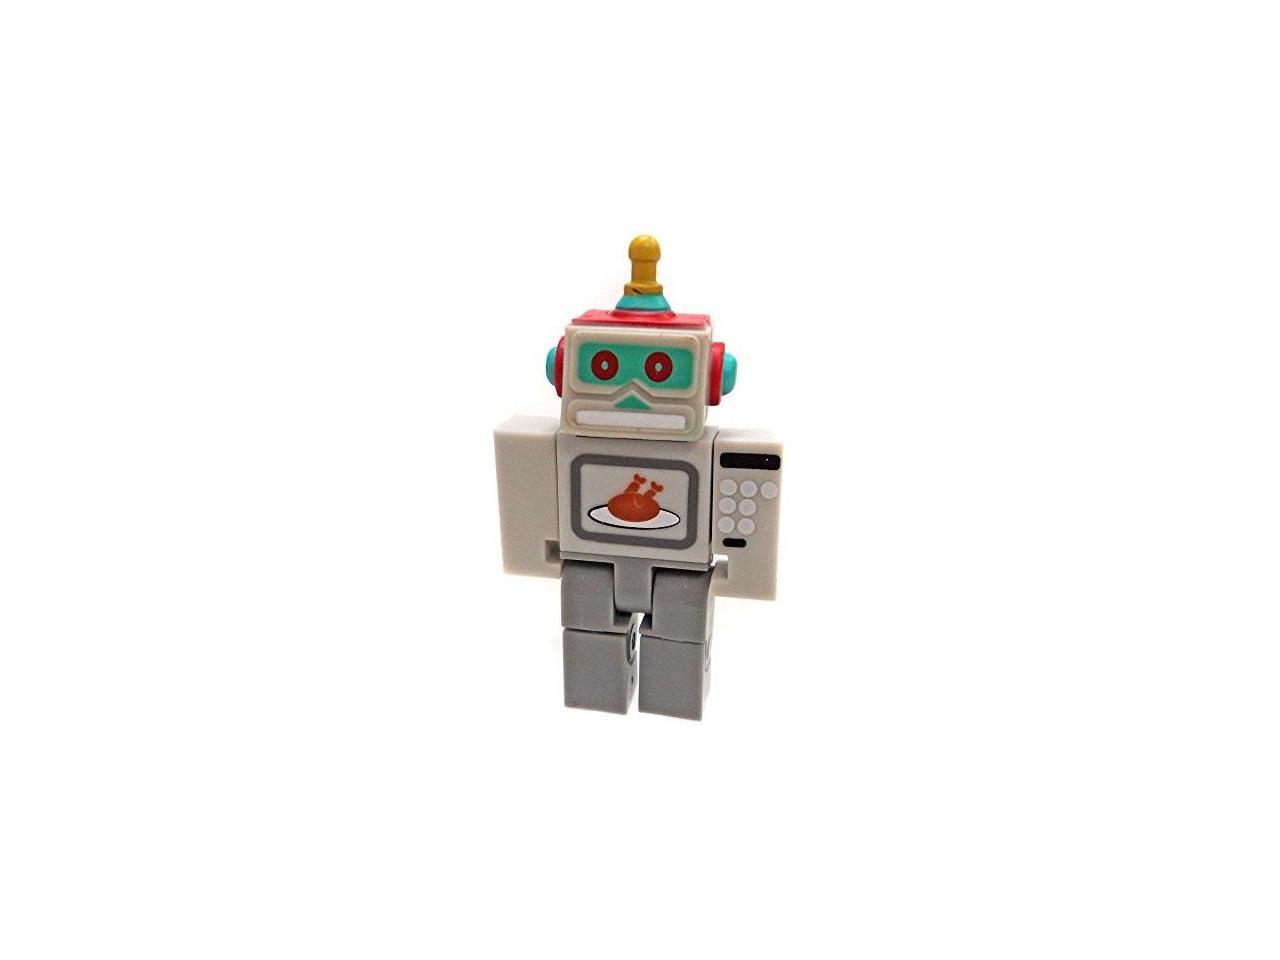 Roblox Series 2 Microwave Spybot Action Figure Mystery Box Virtual Item Code 2 5 Newegg Com - fresh bargains on roblox series 2 microwave spybot mystery